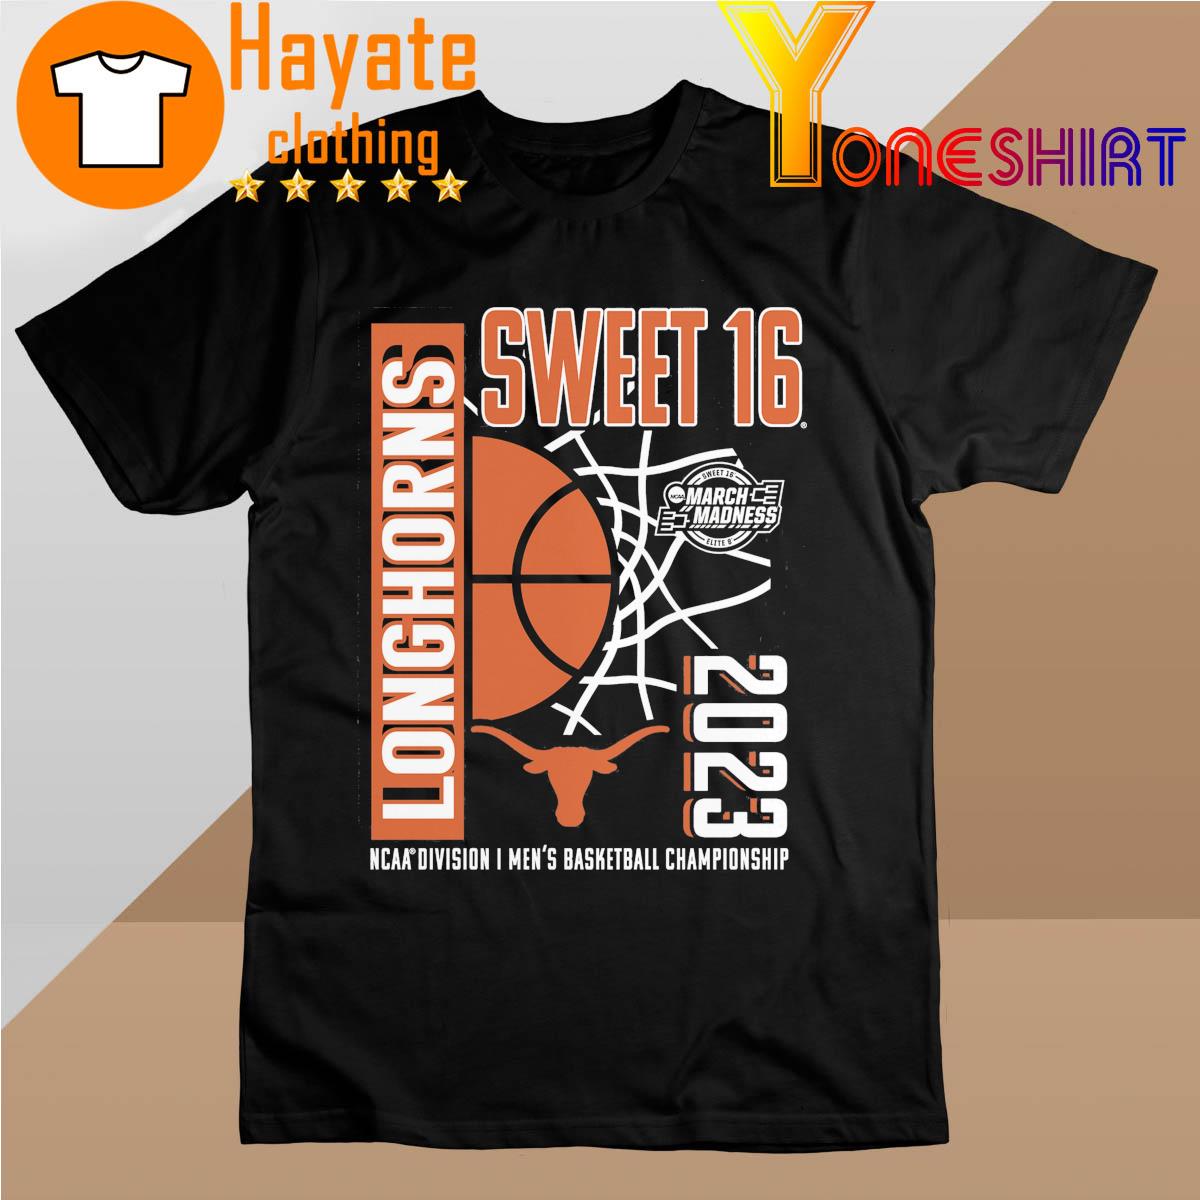 Texas Longhorns Sweet 16 Ncaa Division I Men's Basketball Championship shirt